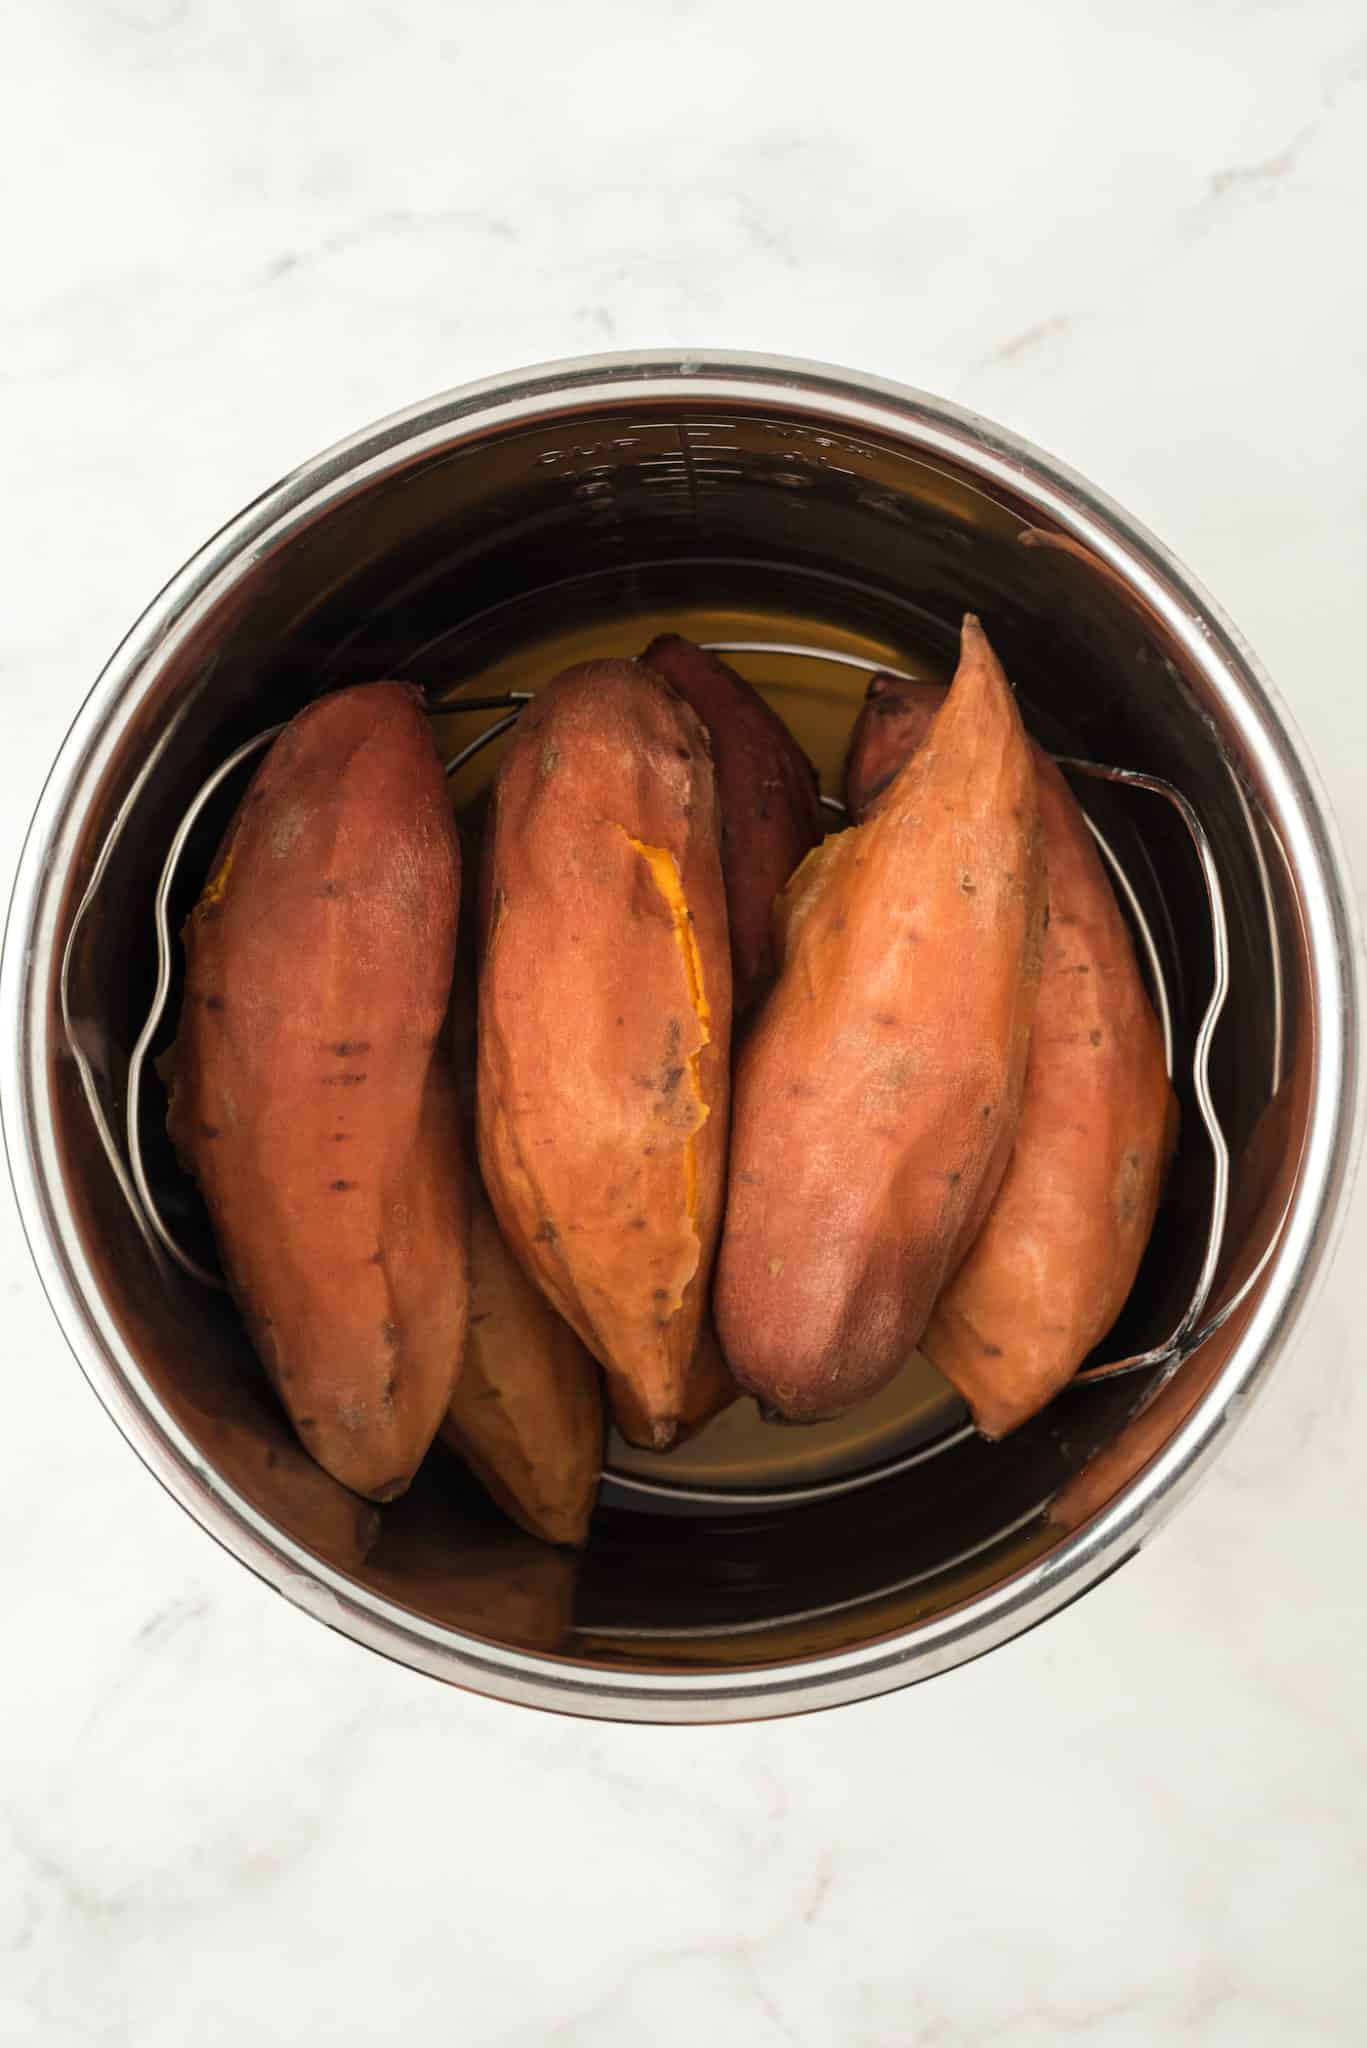 baked sweet potatoes inside pressure cooker